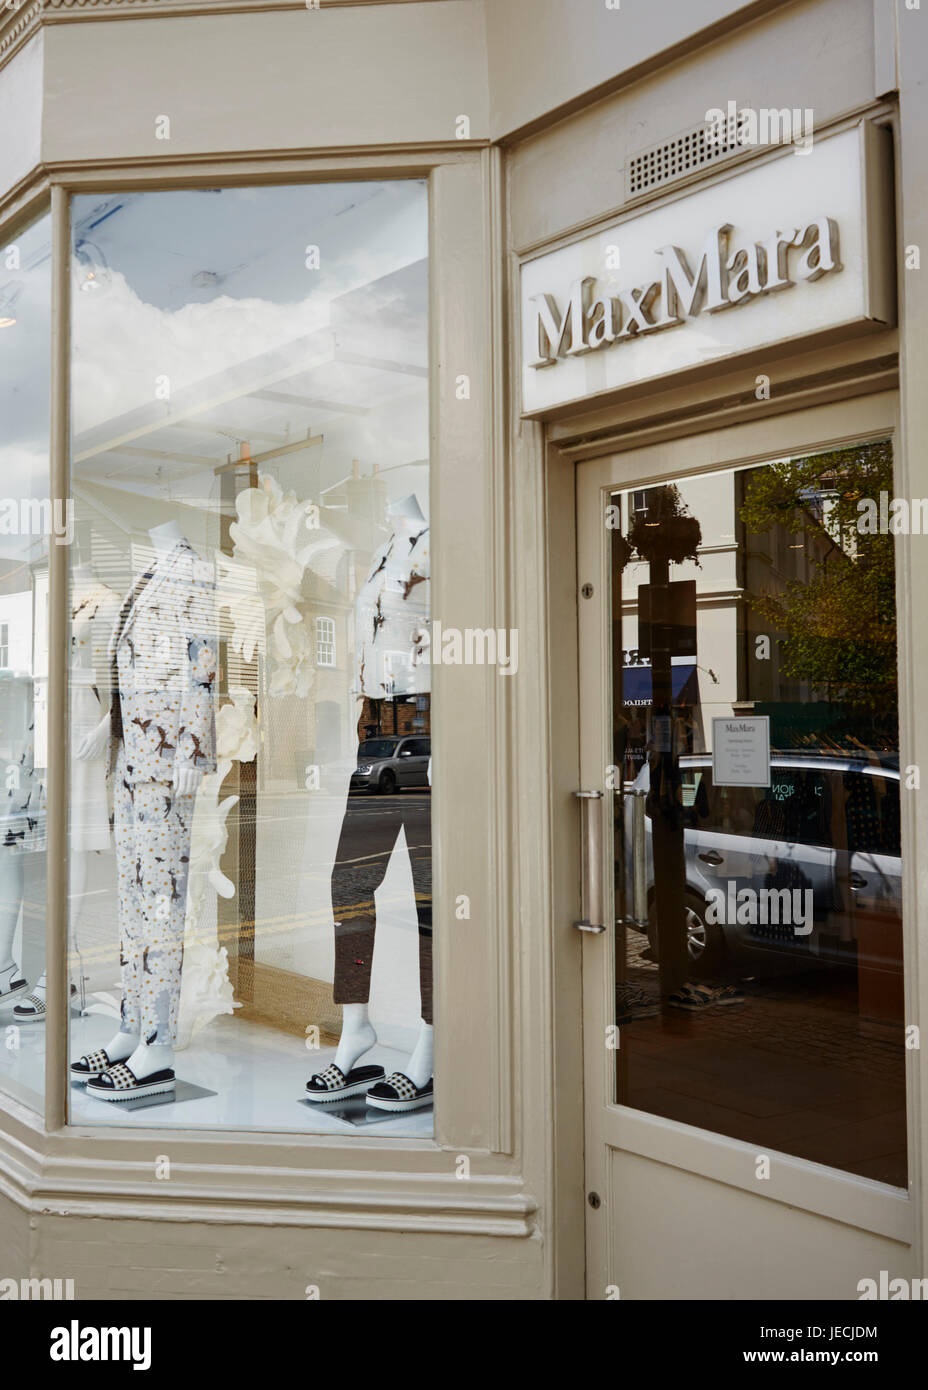 Max Mara Shop Front, London, UK Stock Photo - Alamy